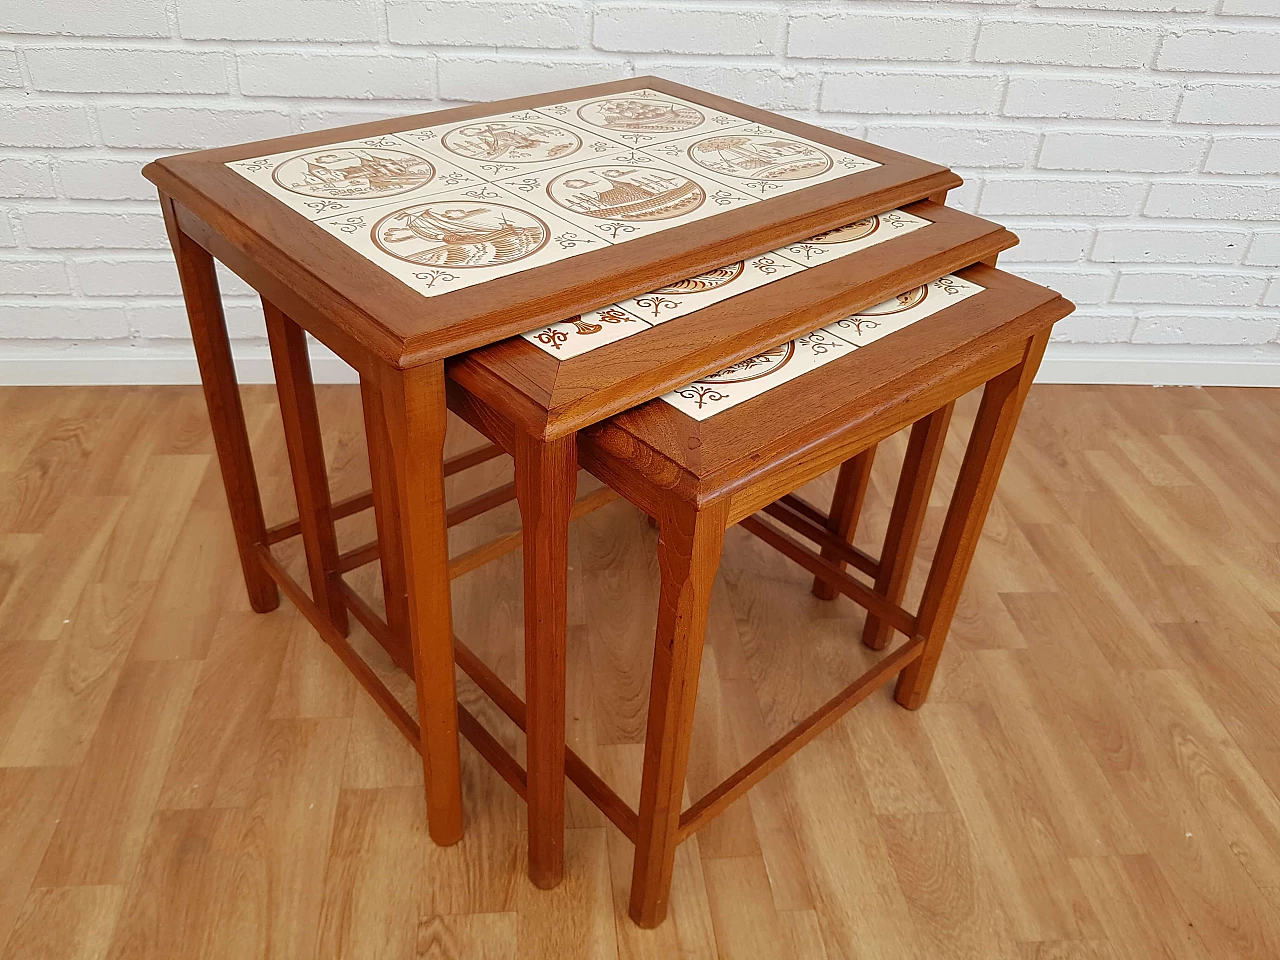 Nesting table, 60s, danish design, hand-painted ceramic tiles, teak wood 1064947